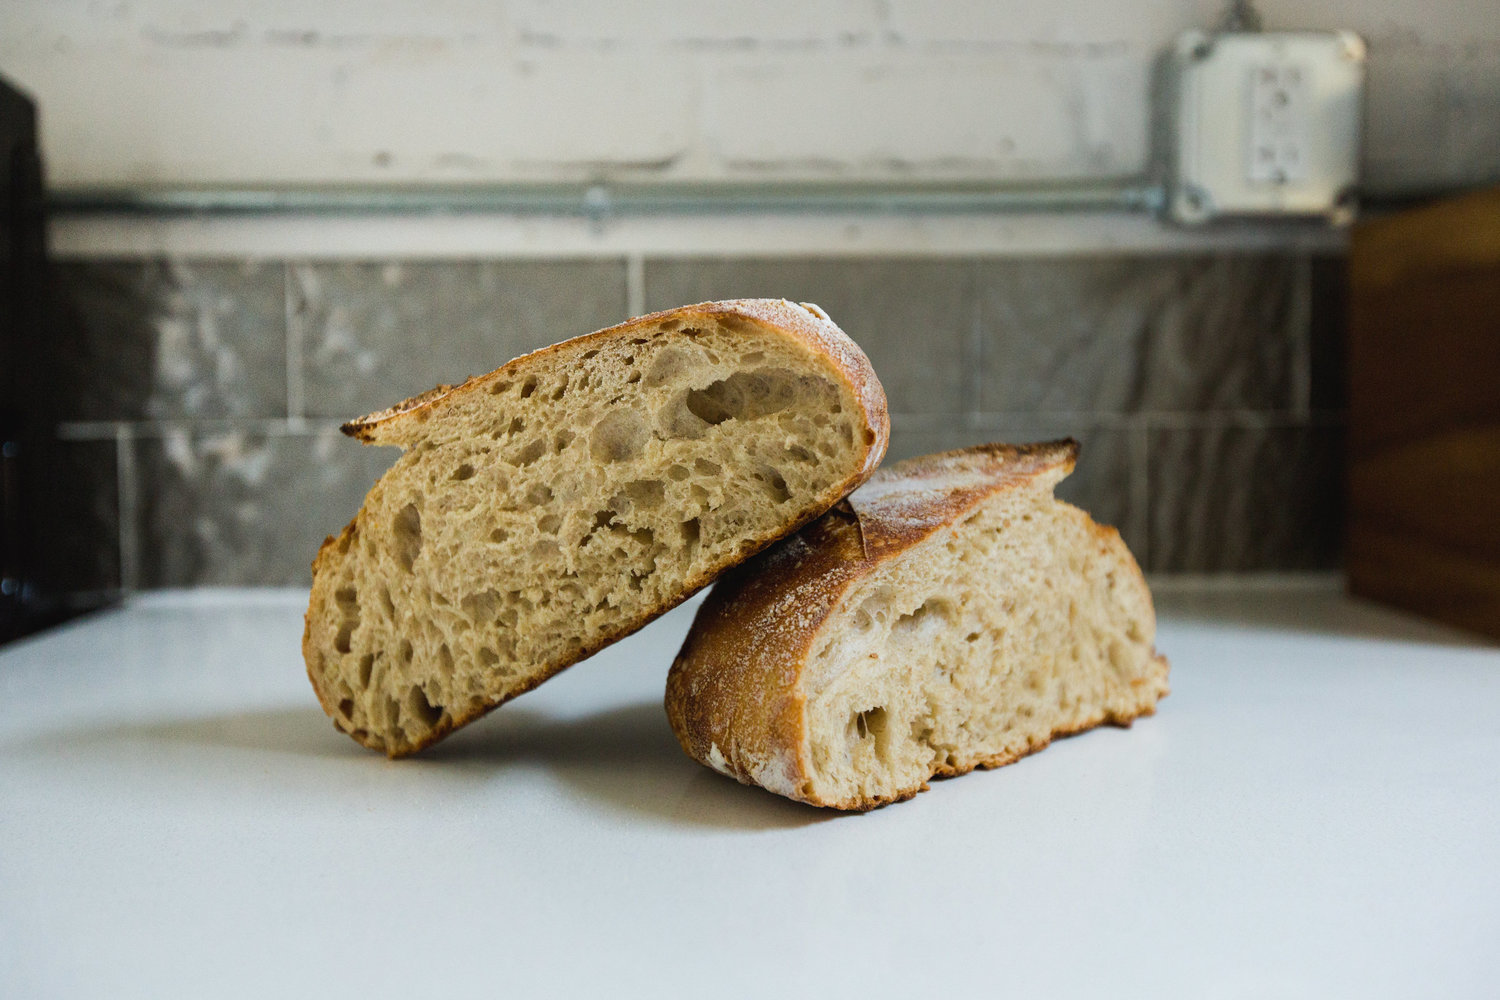 Easy Sourdough Bread Recipe for Beginners